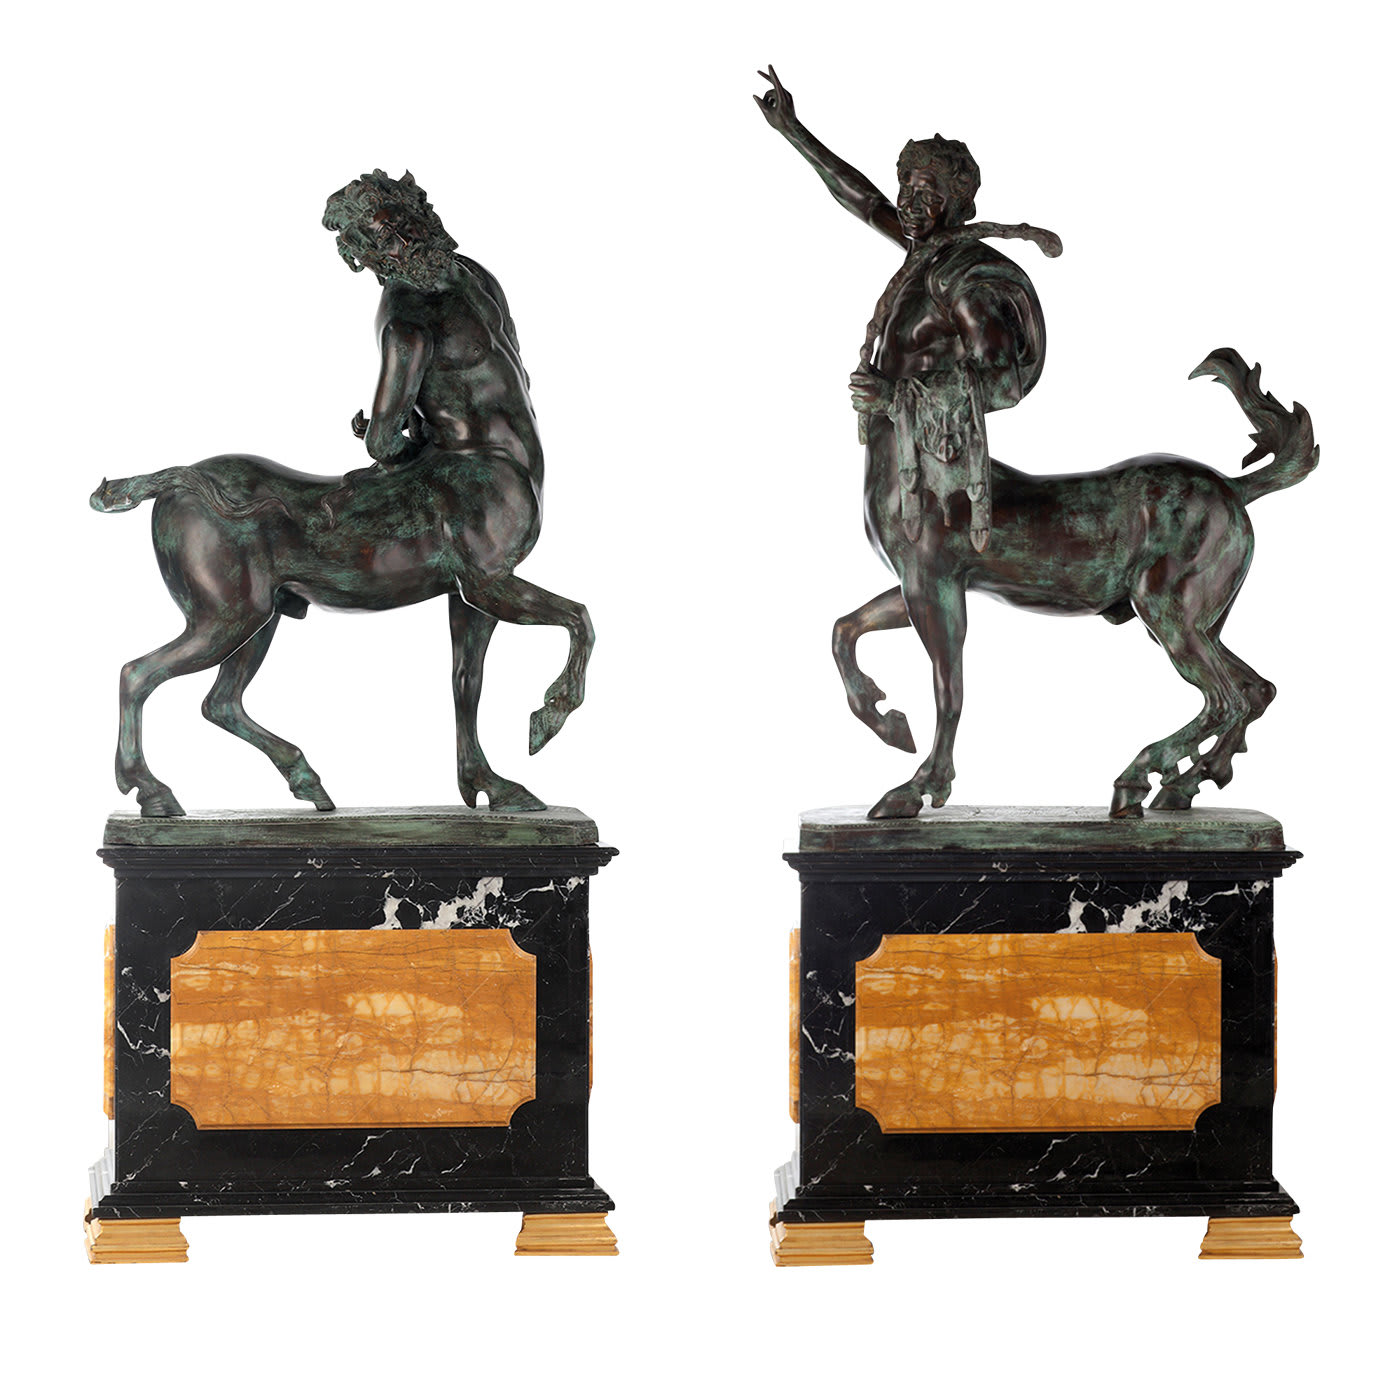 Set of 2 Centaurs Statues on Pedestals - Fonderia Artistica Ruocco